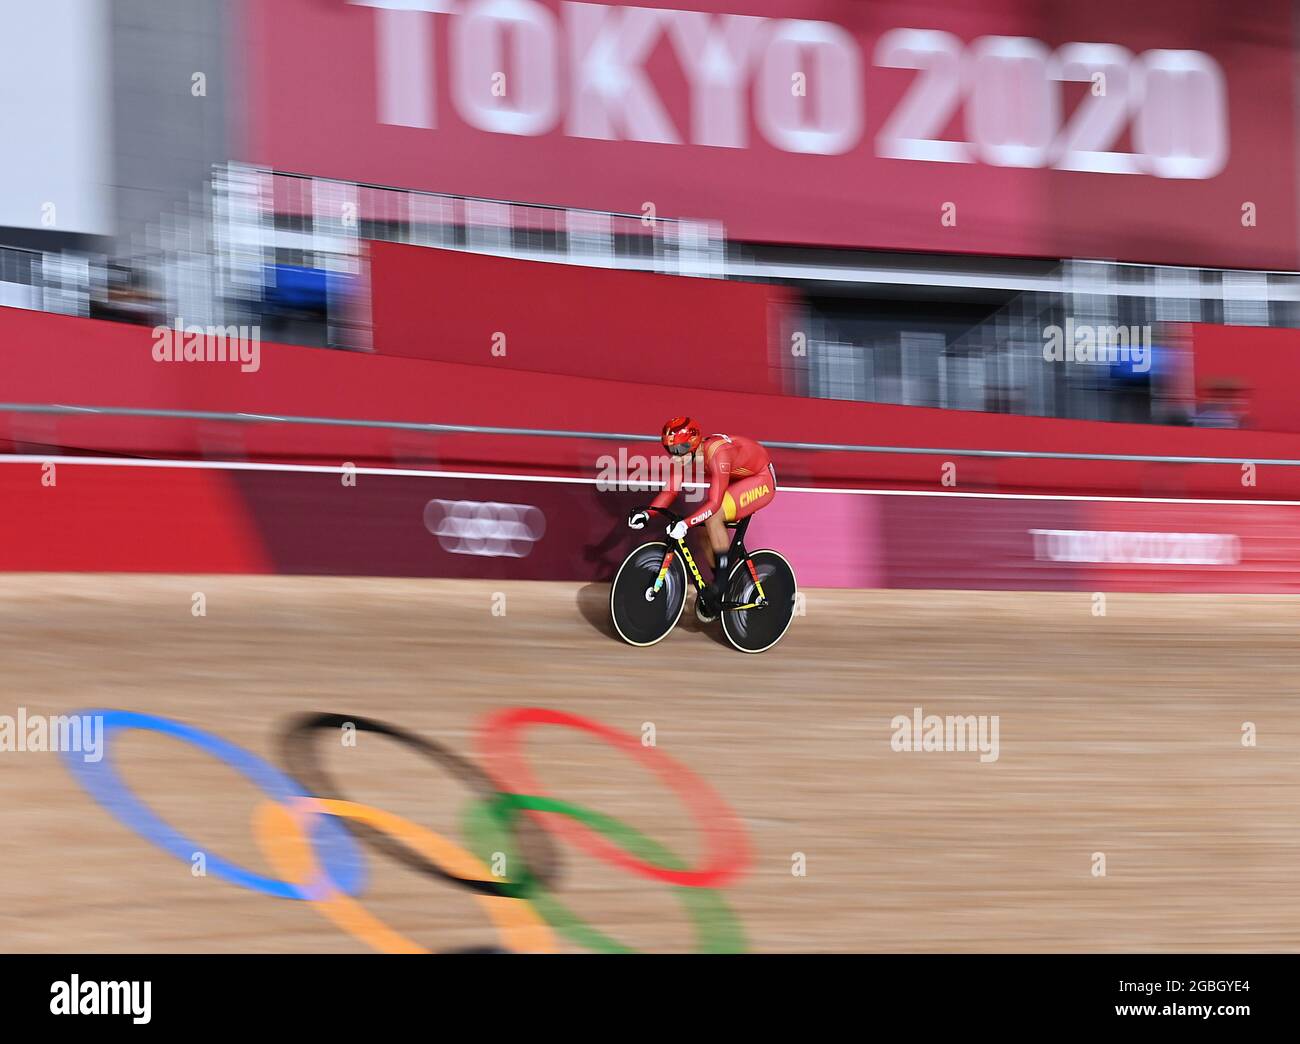 (210804) --IZU, Aug. 4, 2021 (Xinhua) -- Xu Chao of China competes during cycling track men's sprint match at Tokyo 2020 Olympic Games, in Izu, Japan, Aug. 4, 2021. (Xinhua/He Changshan) Stock Photo